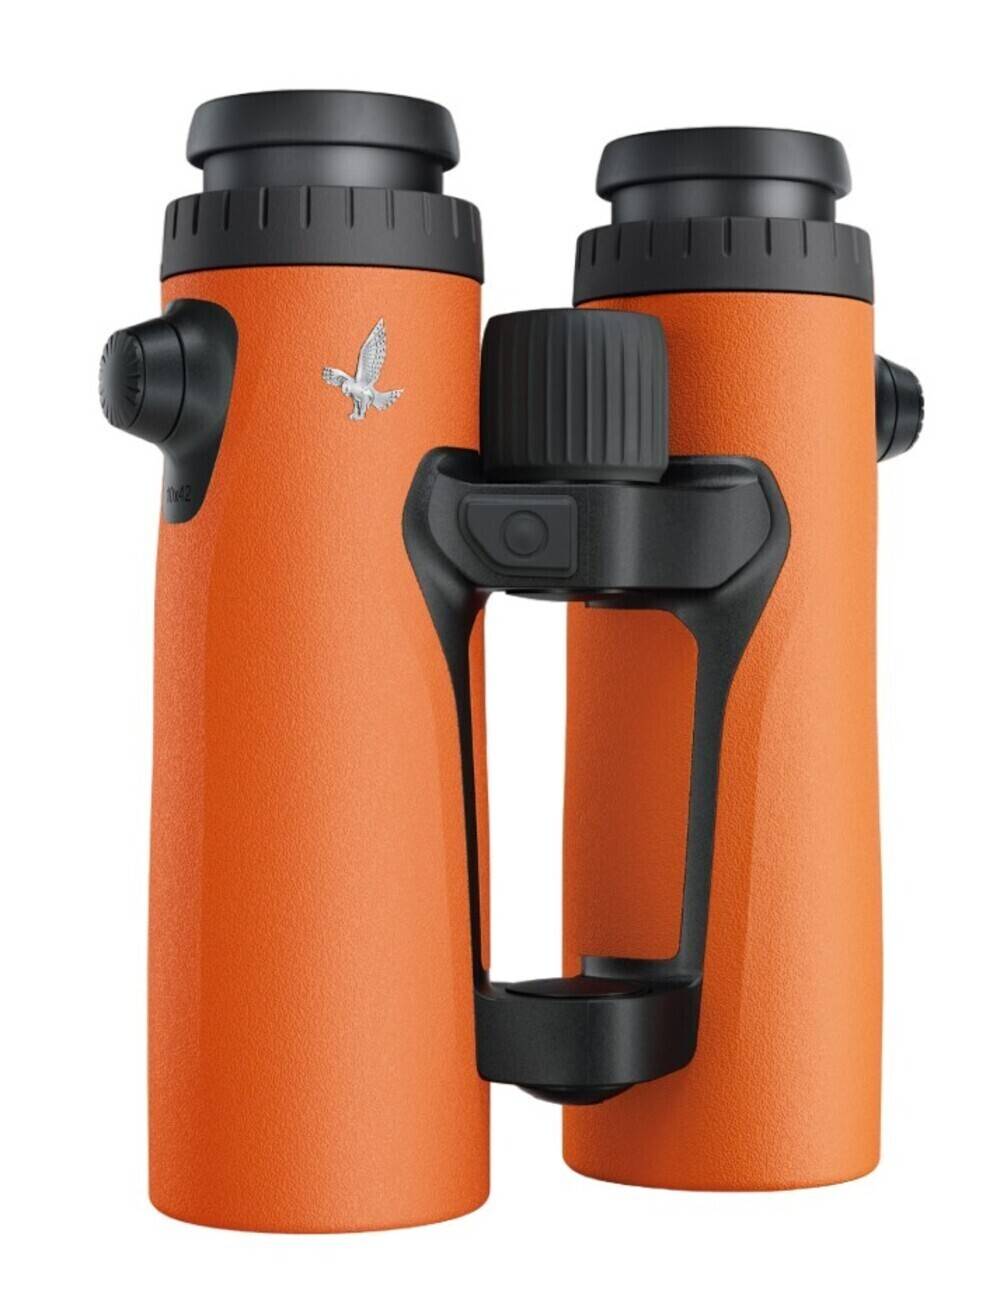 Swarovski EL Range 8 x 42 Binocular with Tracking Assistant and High Transmission Value (Orange)